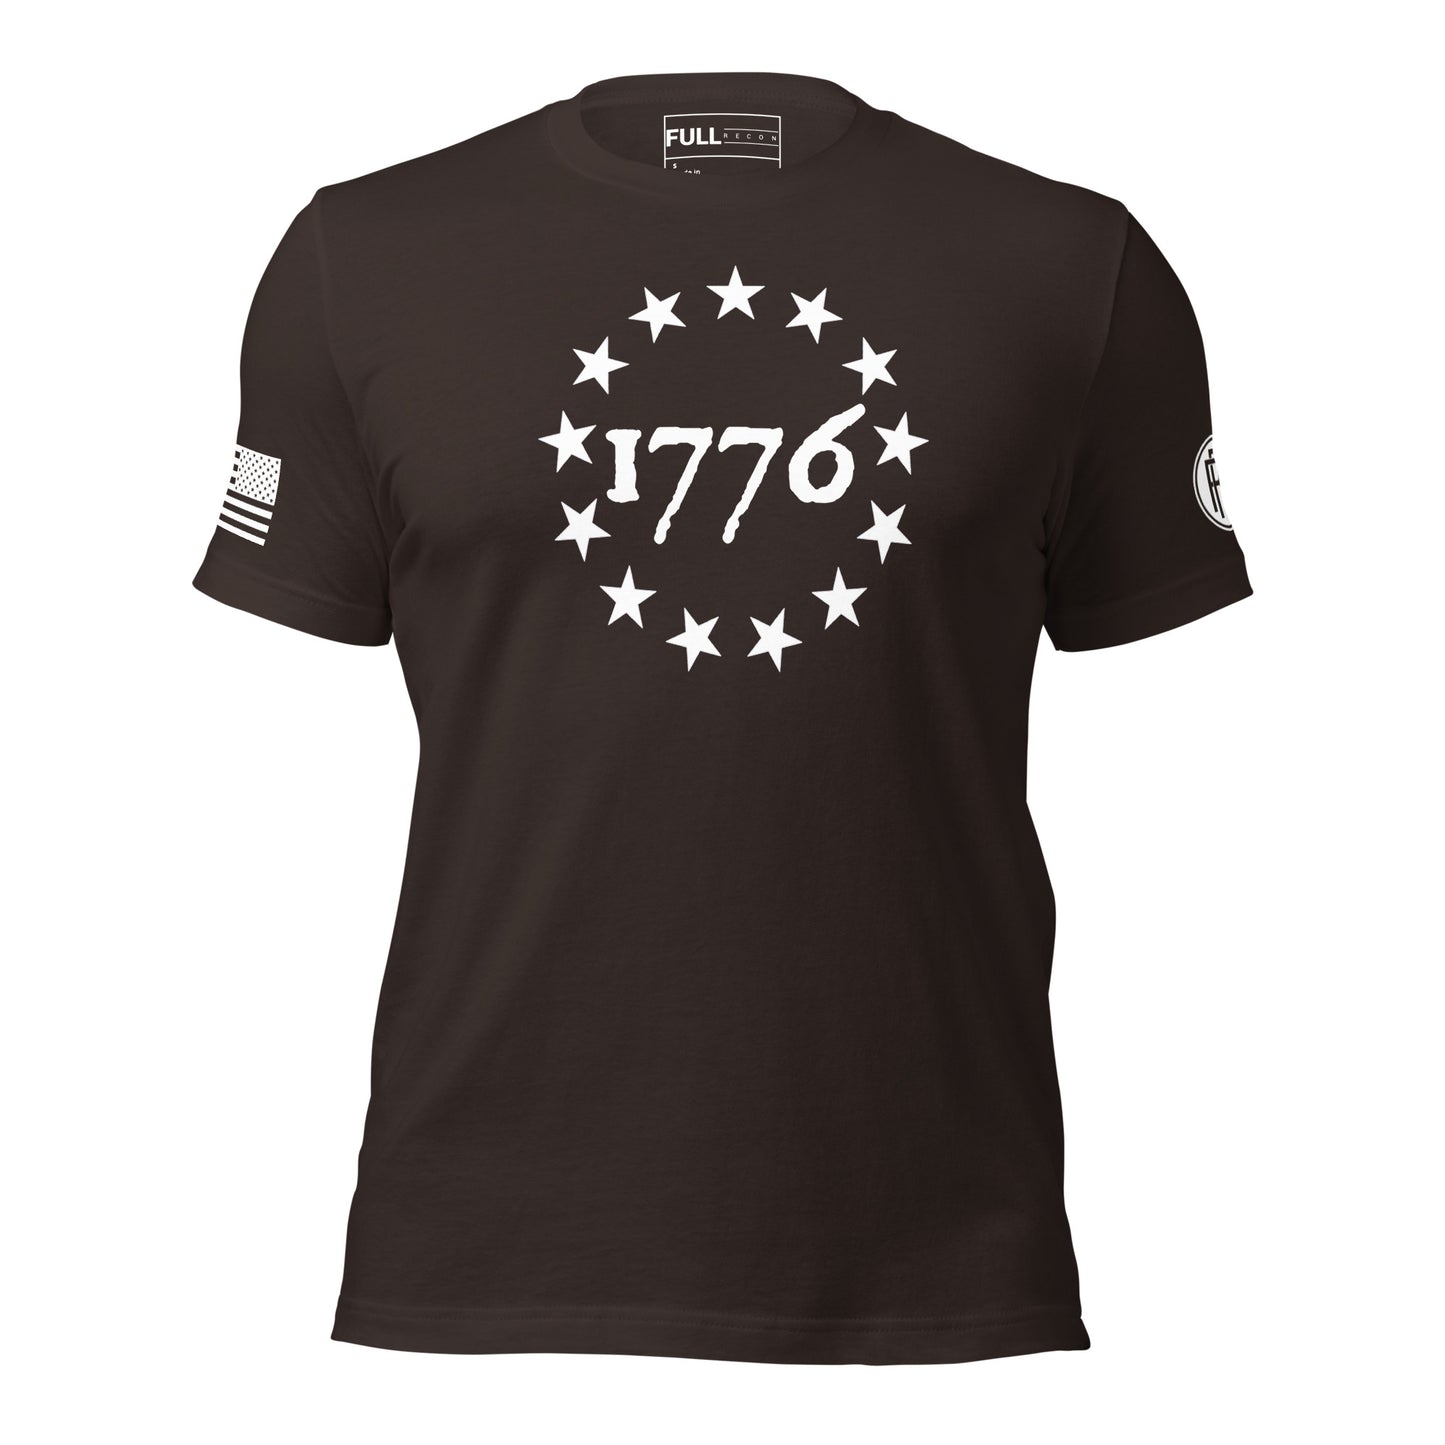 Stars of 1776